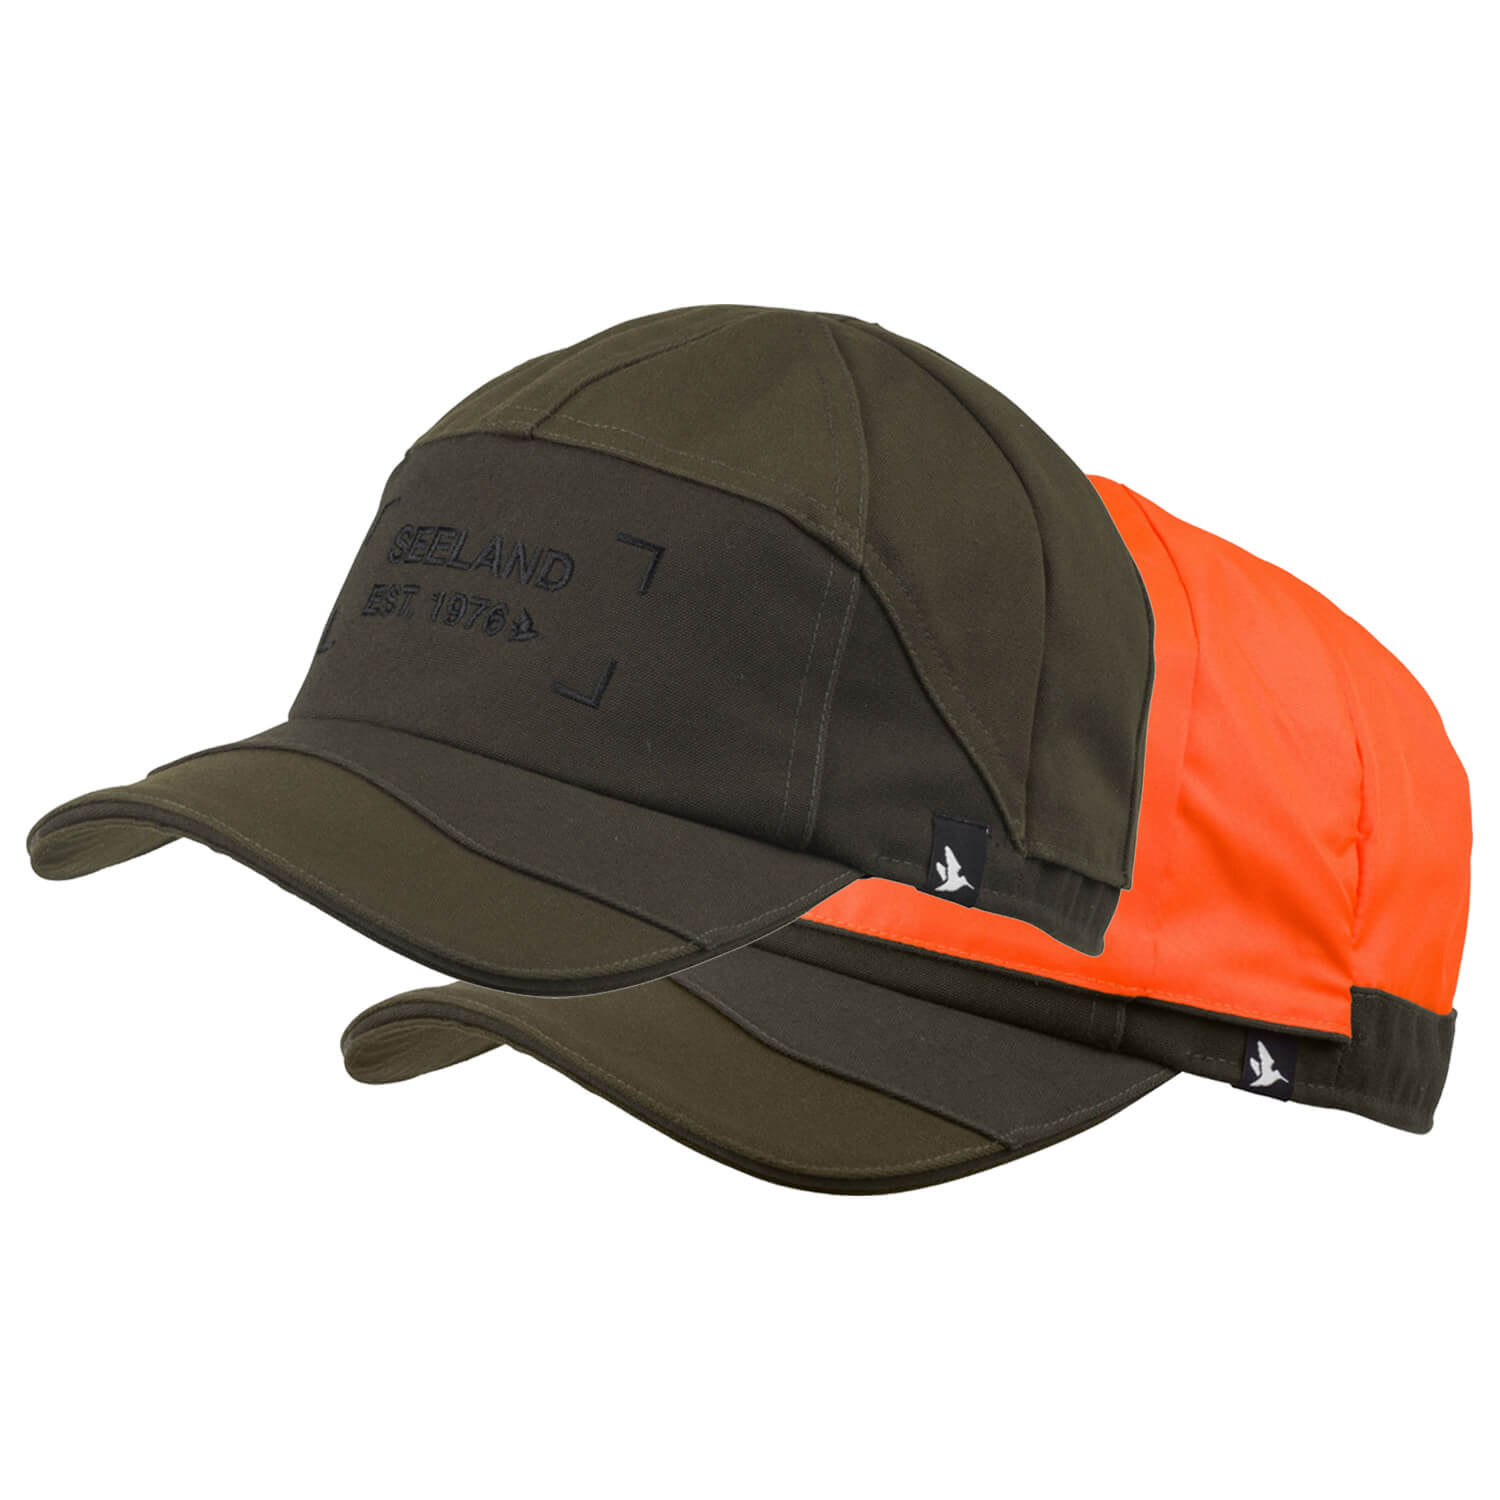 Seeland reversible cap Trax (Light Pine/Orange) - Beanies & Caps